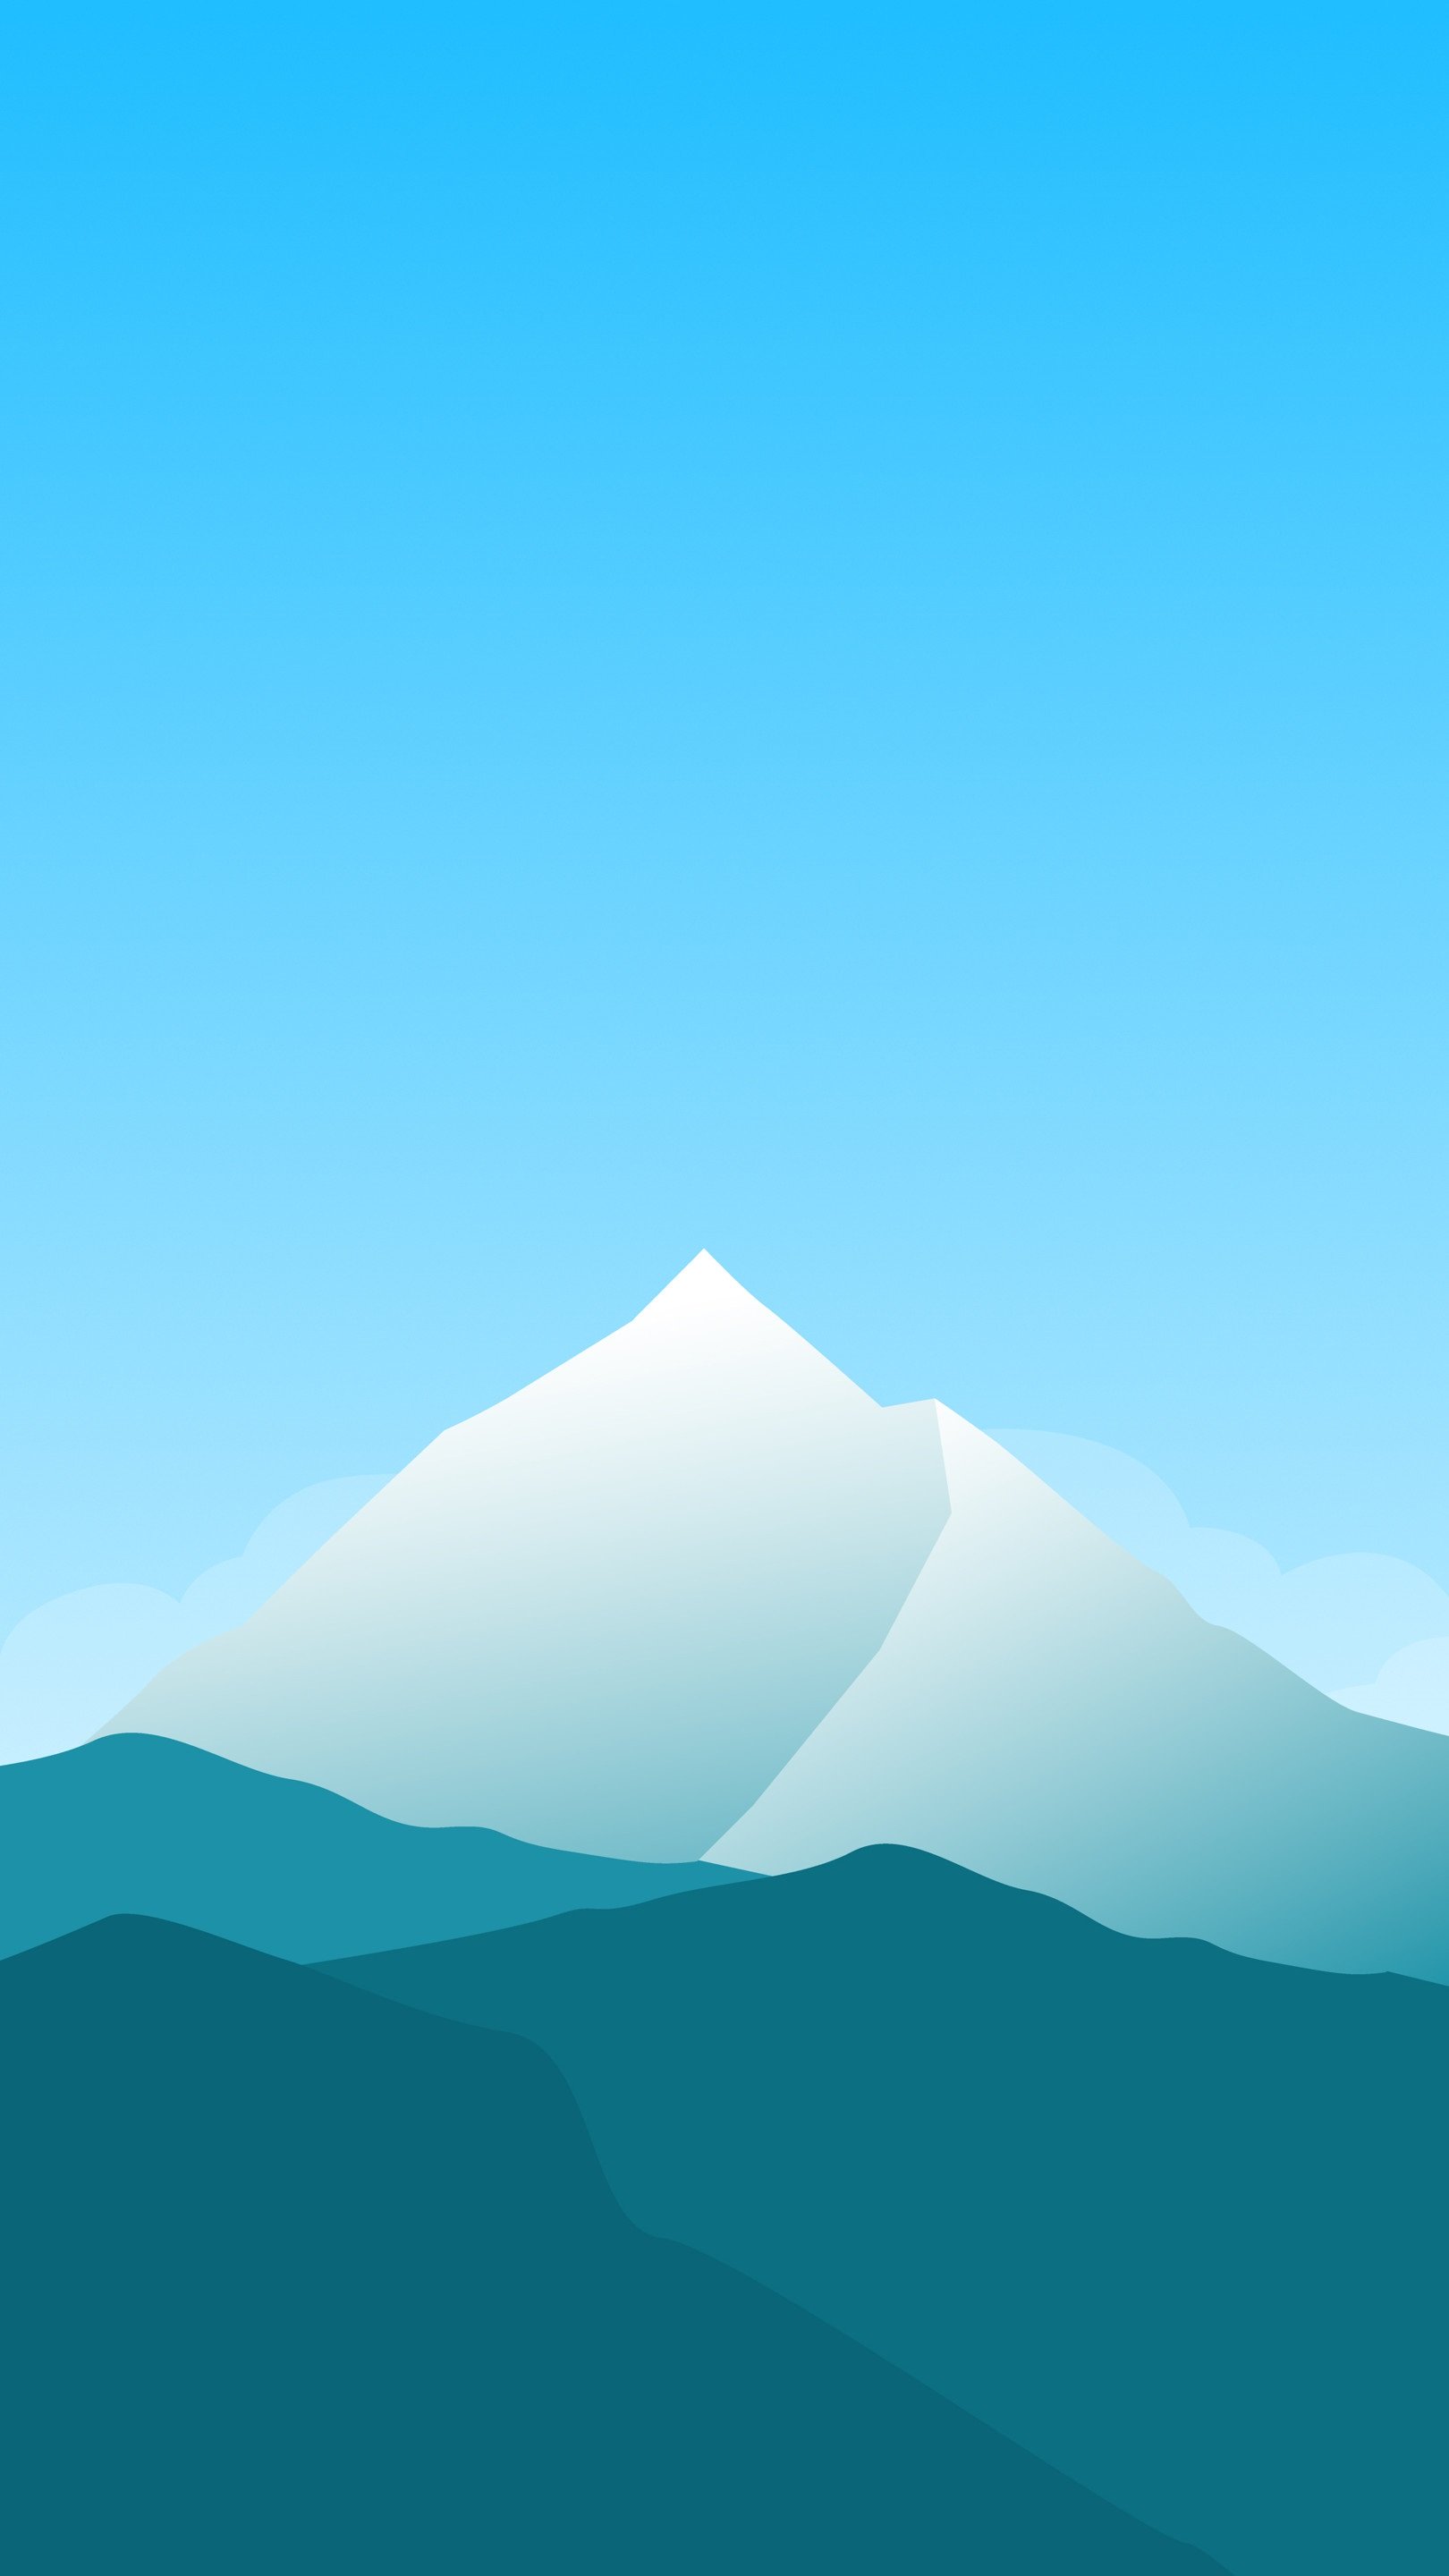 minima wallpaper,himmel,blau,stratovulkan,berg,hügel